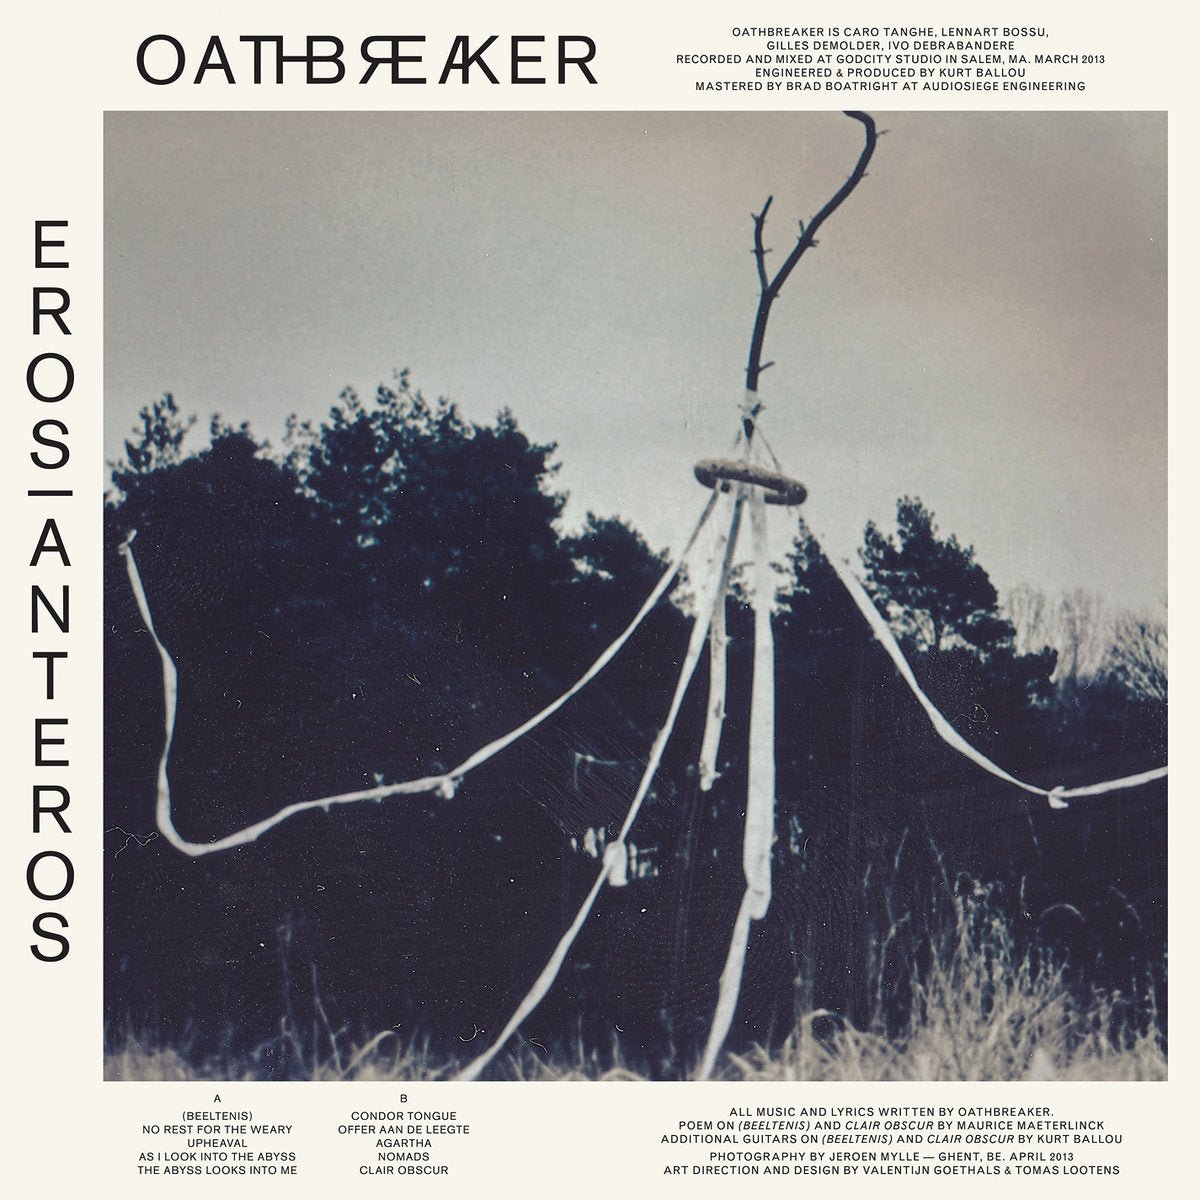 Oathbreaker - Eros Anteros LP - Vinyl - Deathwish